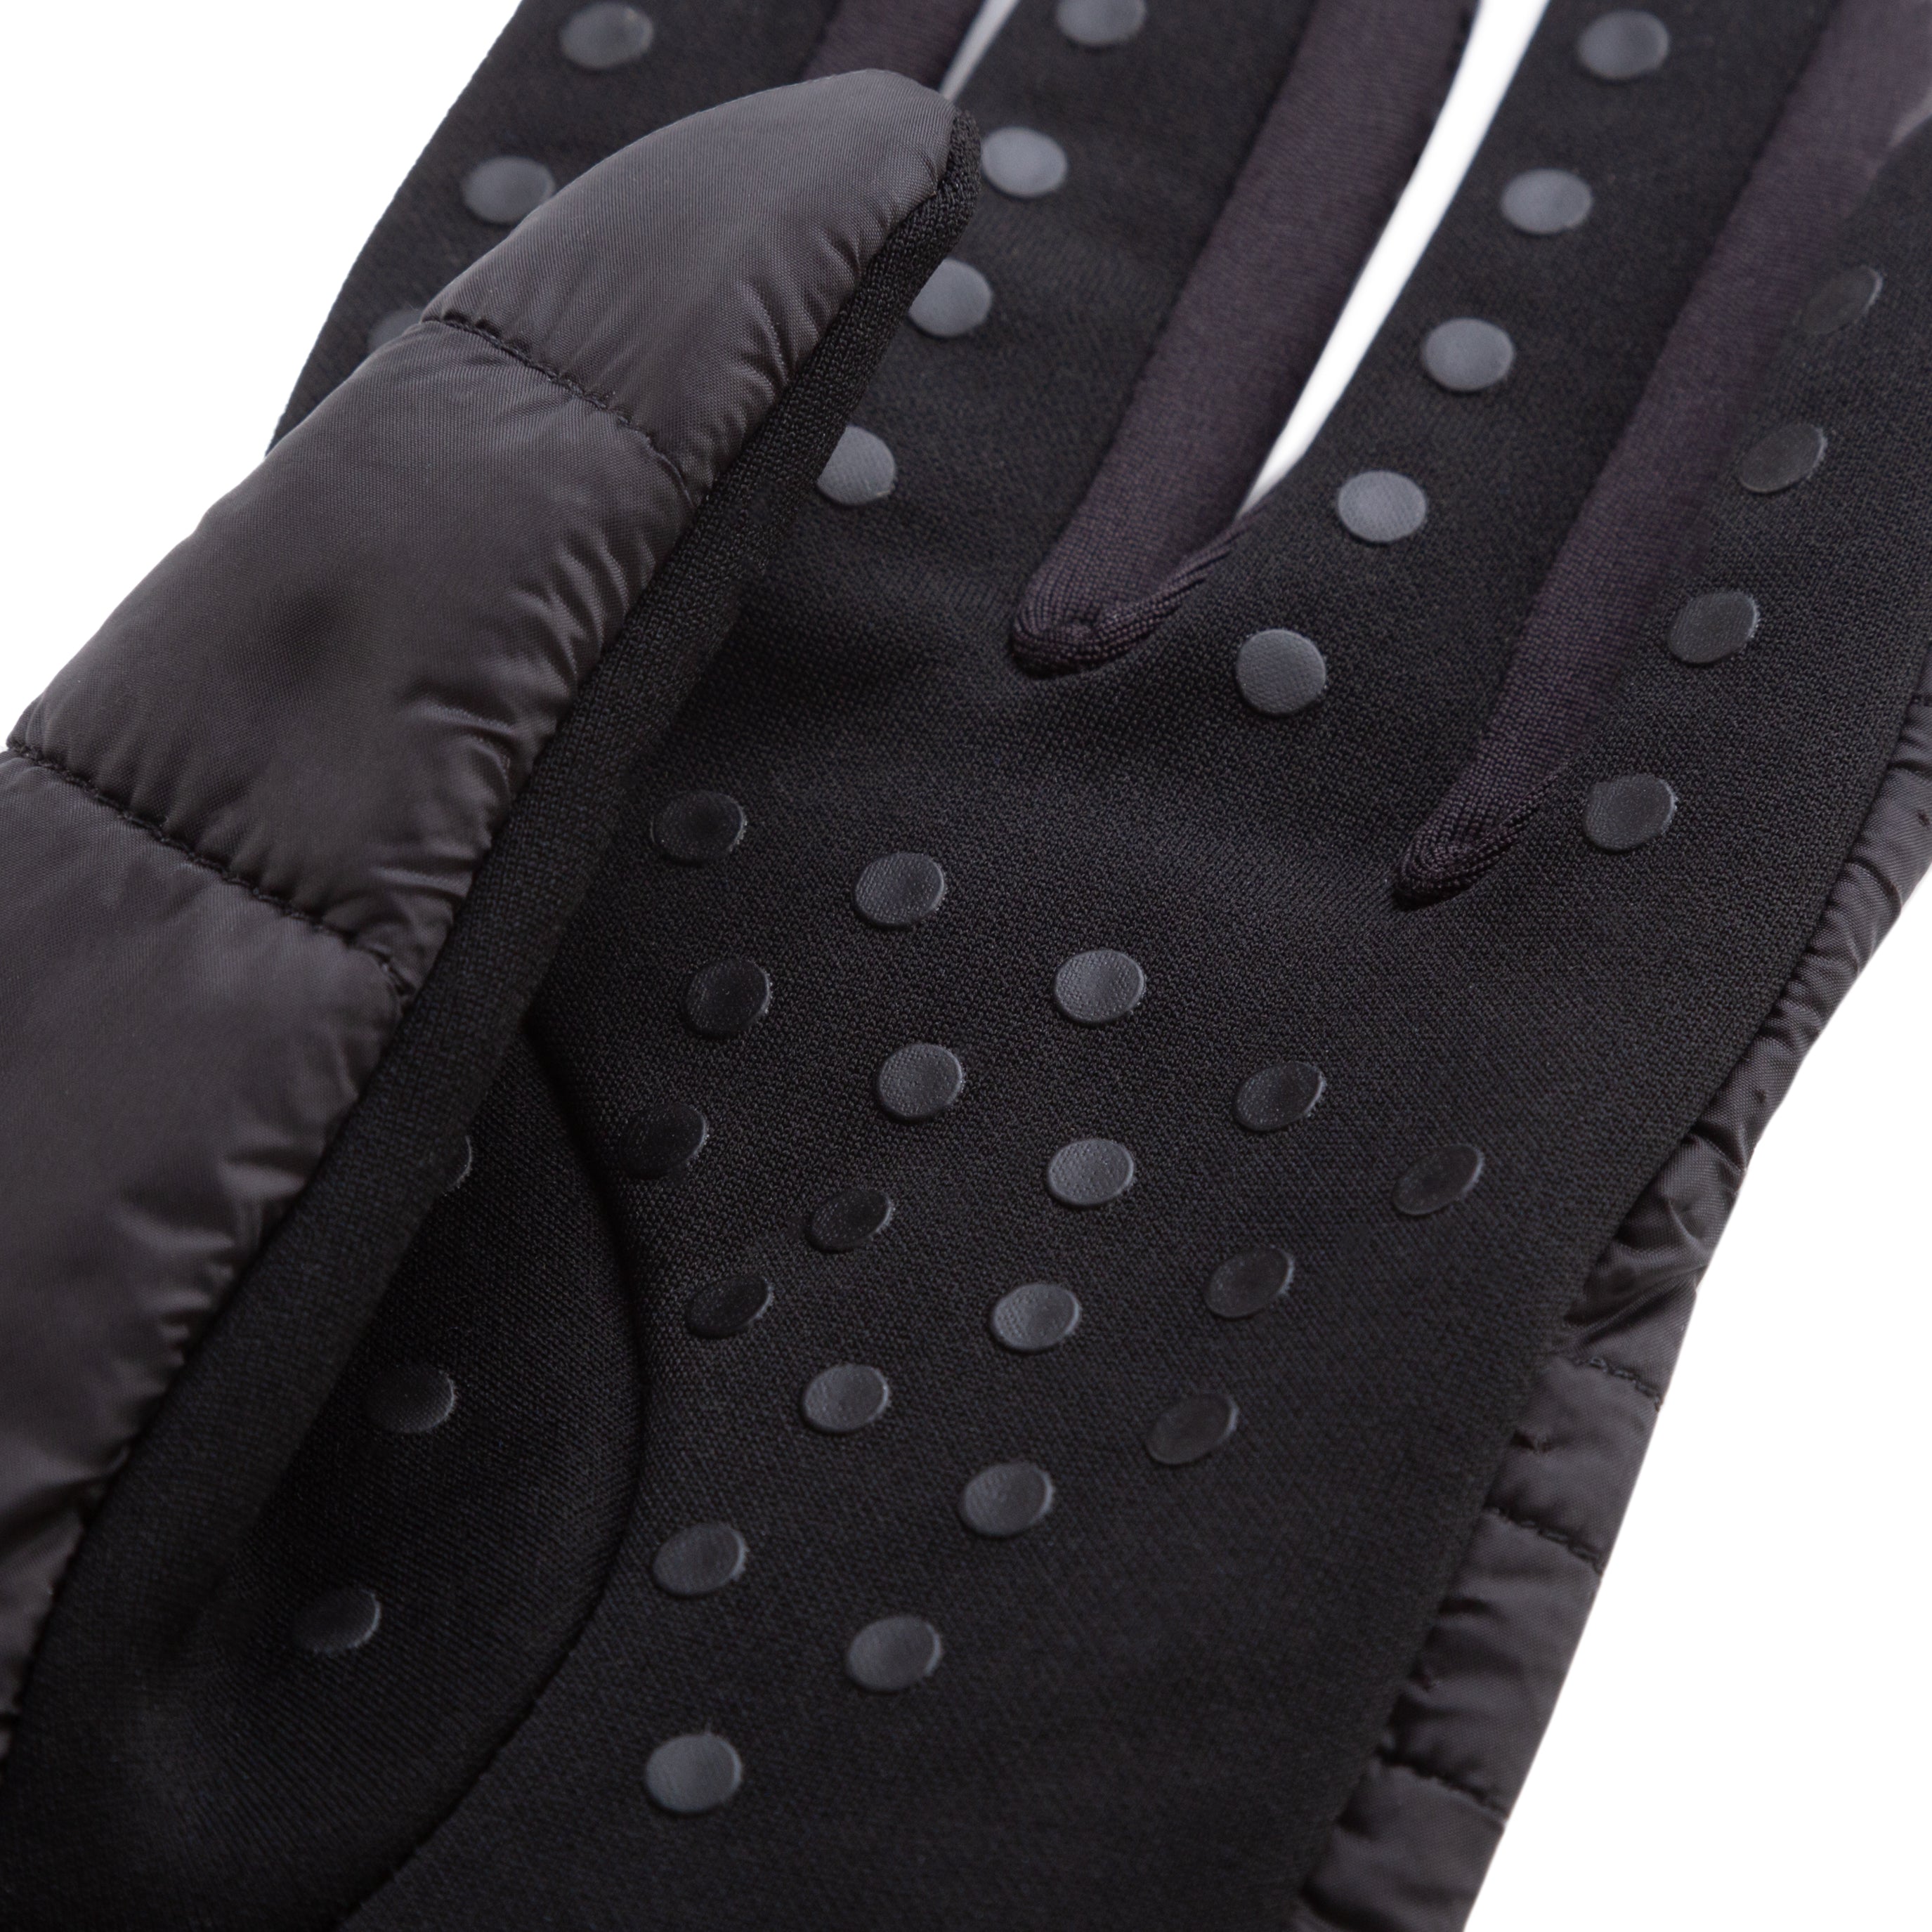 Stretch Grip Hybrid Glove